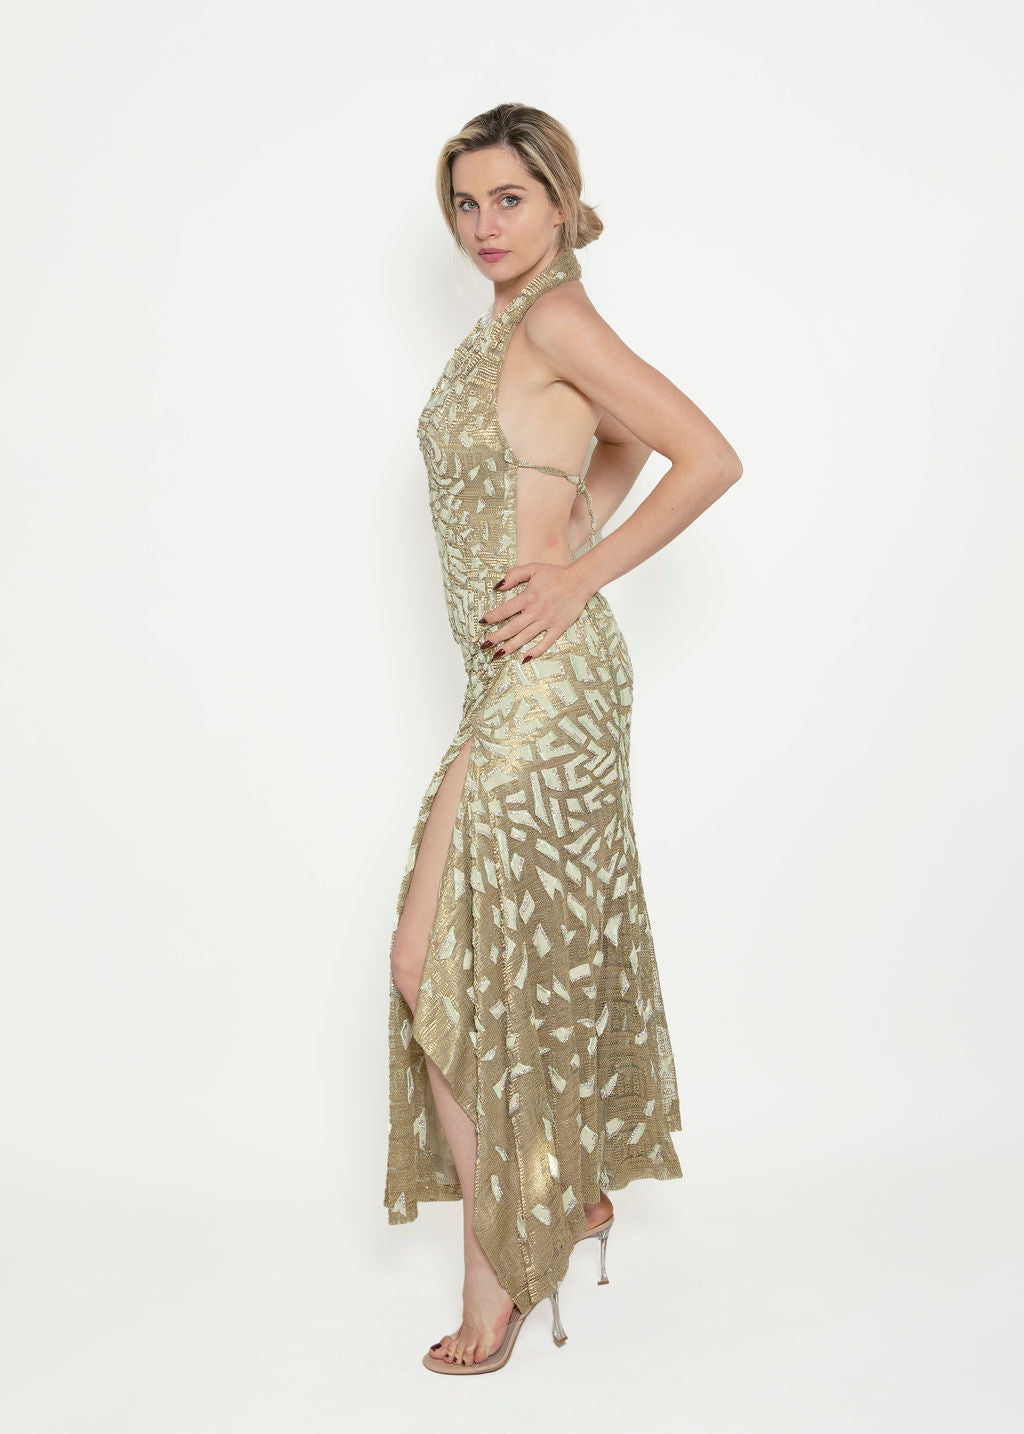 Atelier Versace Couture Metallic Gold Open Back Dress